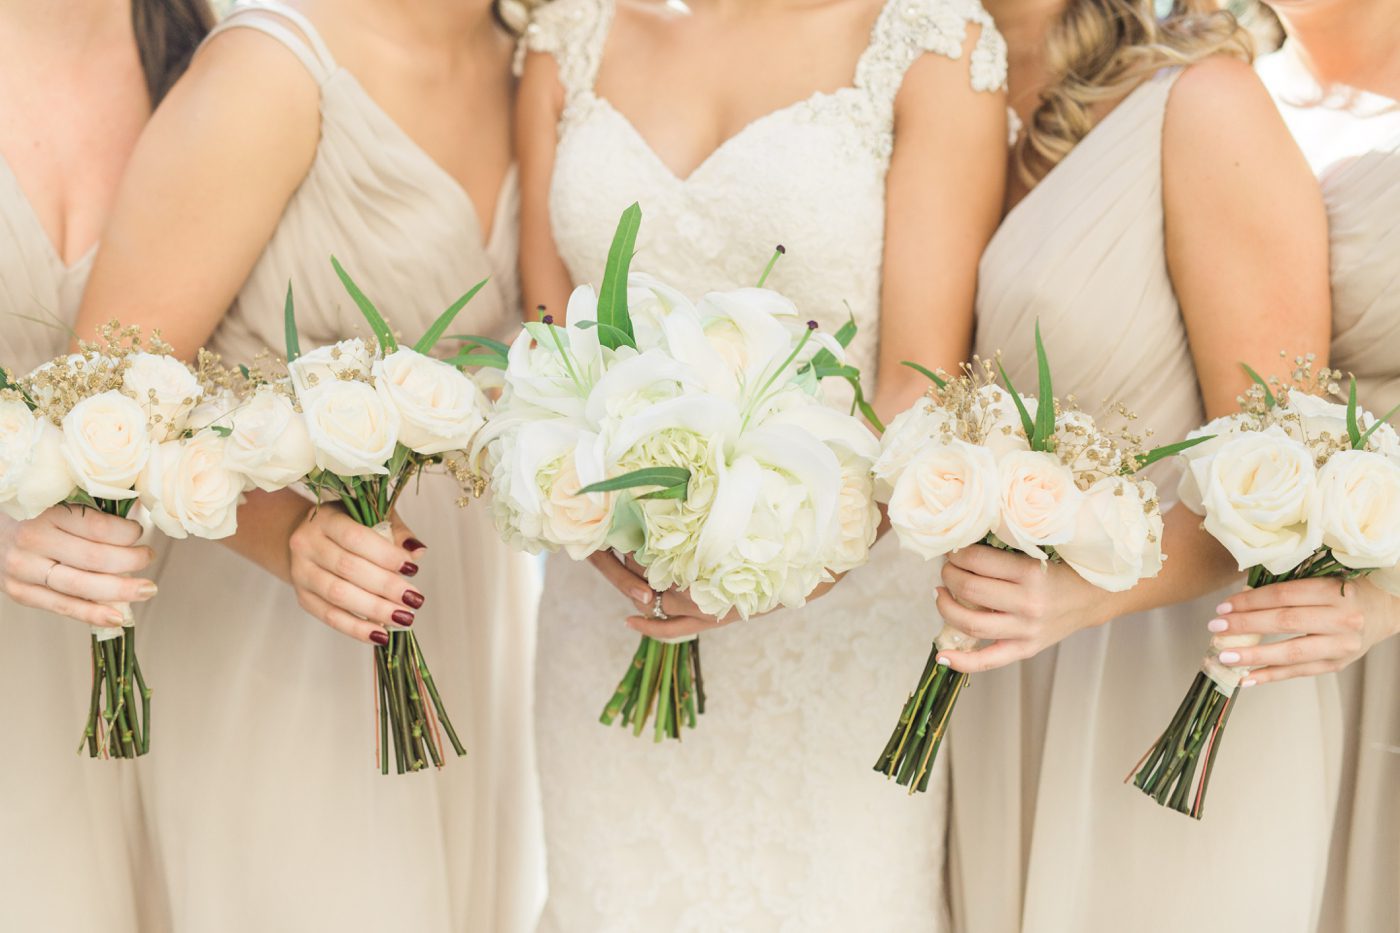 White wedding bouquets with lillies from DDs florals | Vinoy renaissance wedding photos | St Petersburg FL wedding photographersCatherine Ann Photography